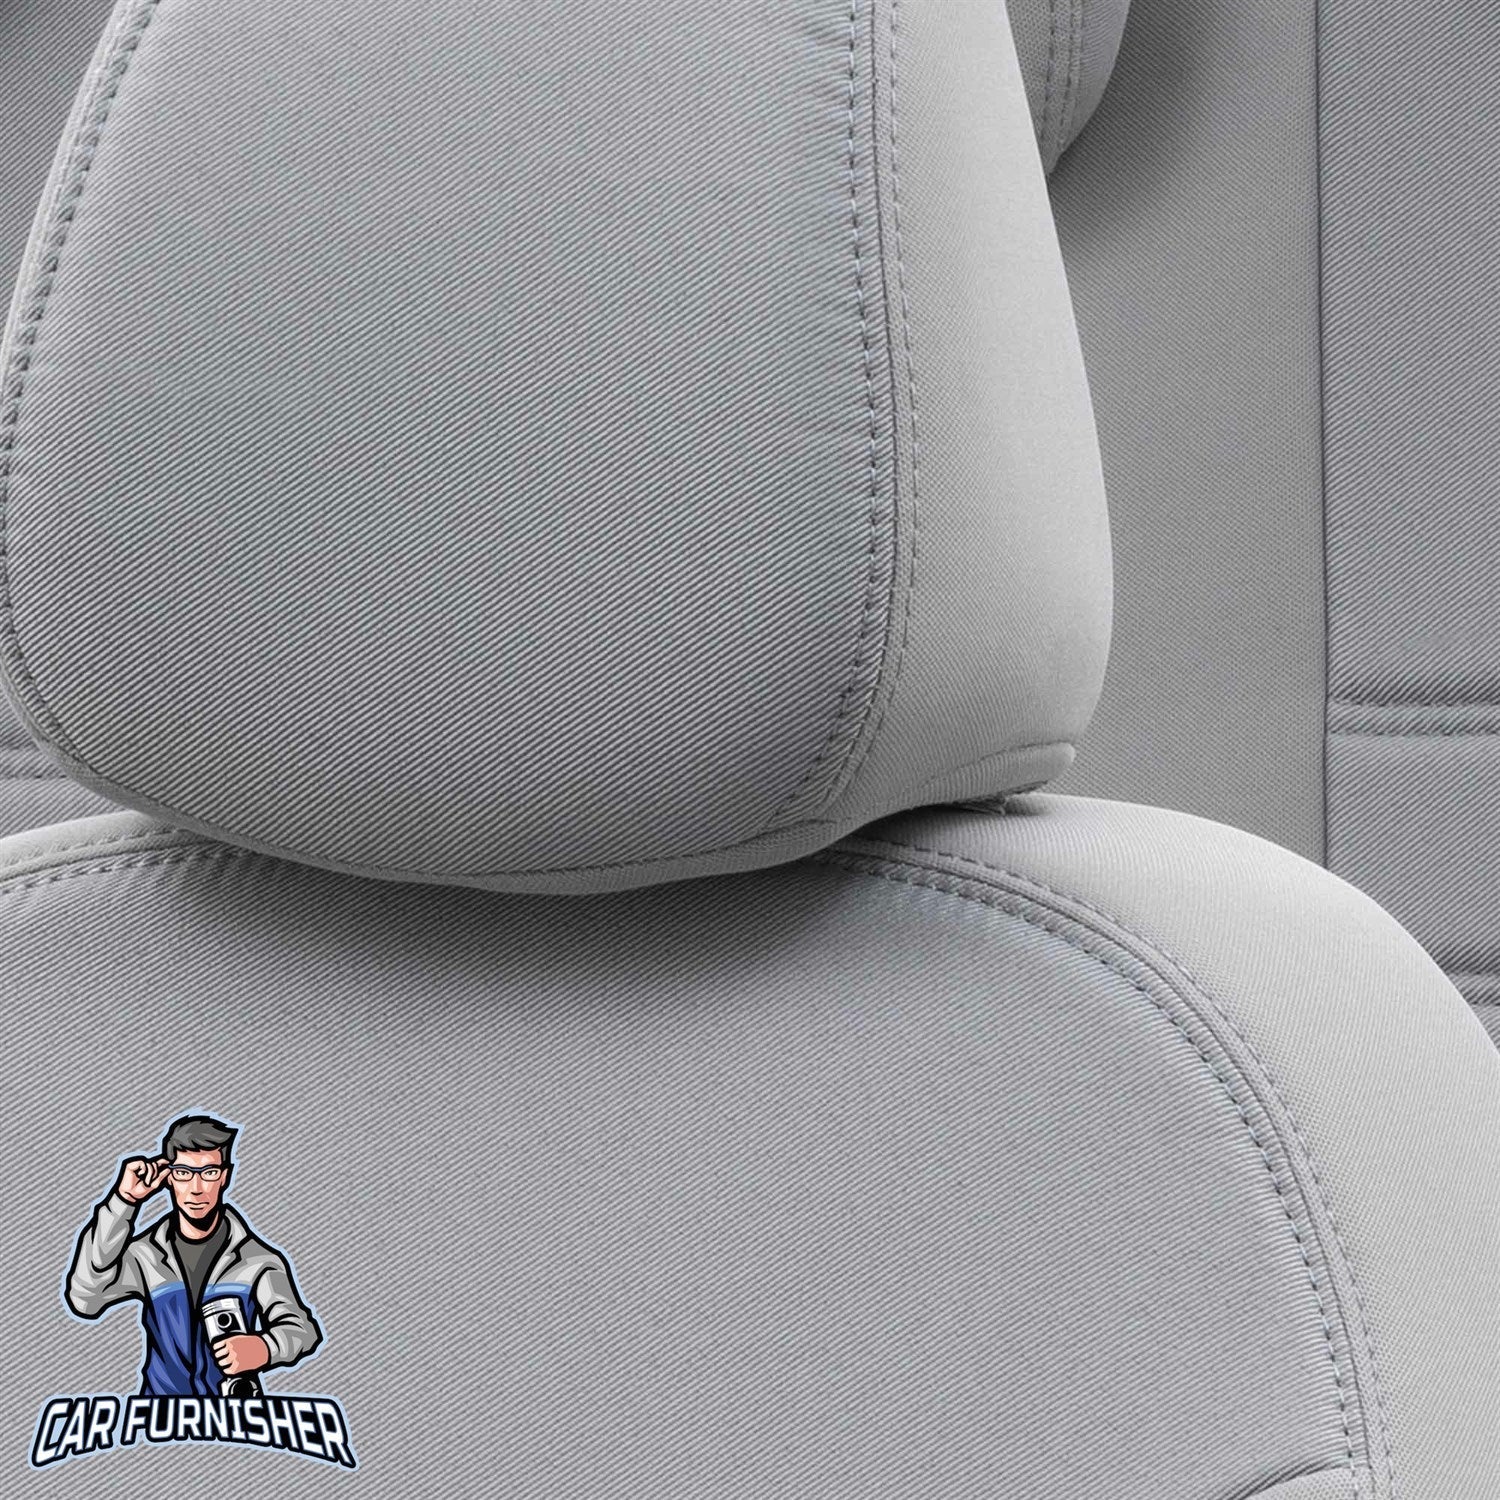 Skoda Roomstar Seat Cover Original Jacquard Design Light Gray Jacquard Fabric